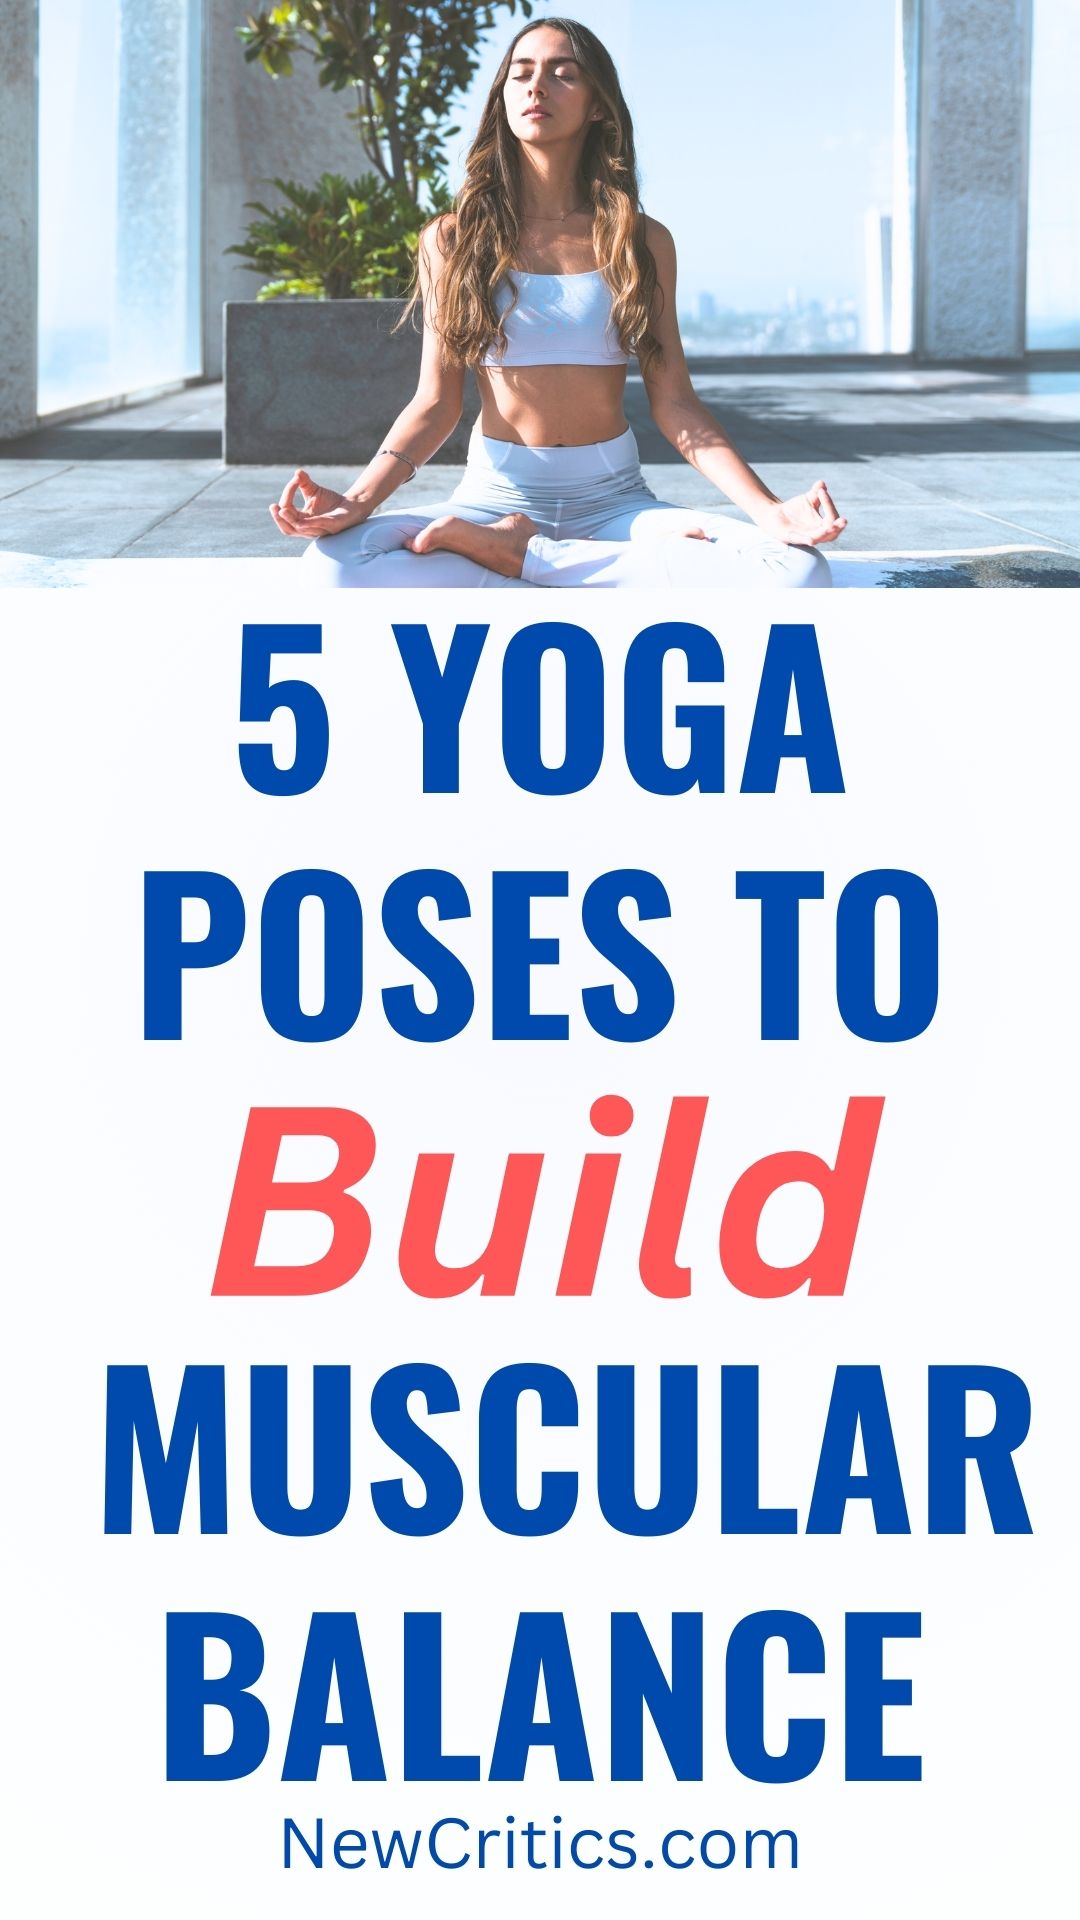 Muscular Balance With Yoga / Canva